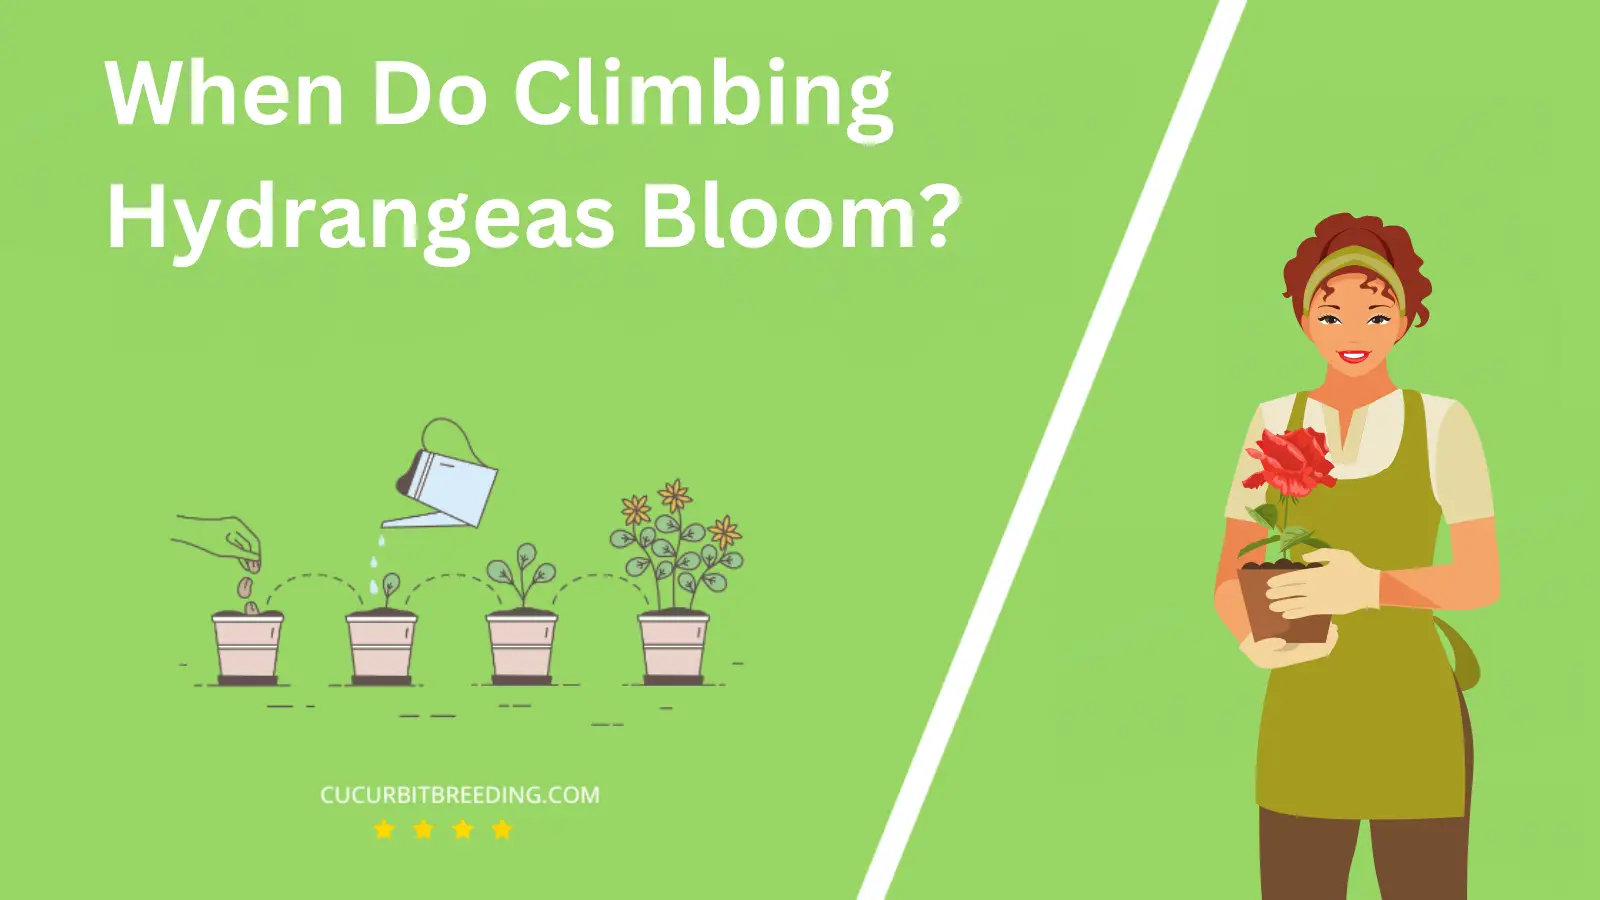 When Do Climbing Hydrangeas Bloom?